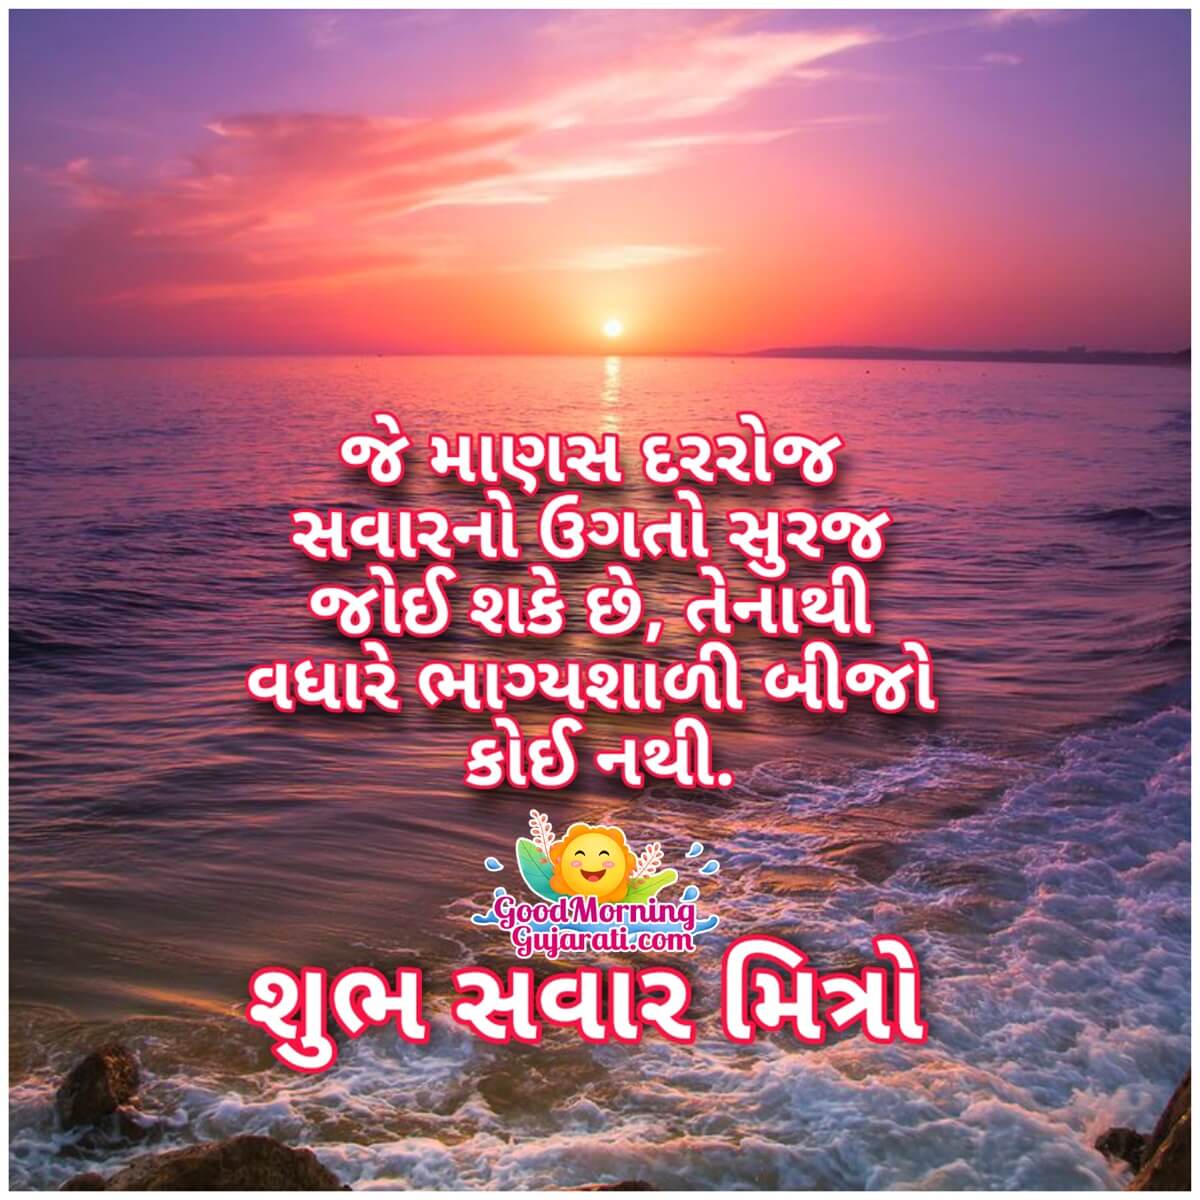 Shubh Savar, Gujarati Message For Friend